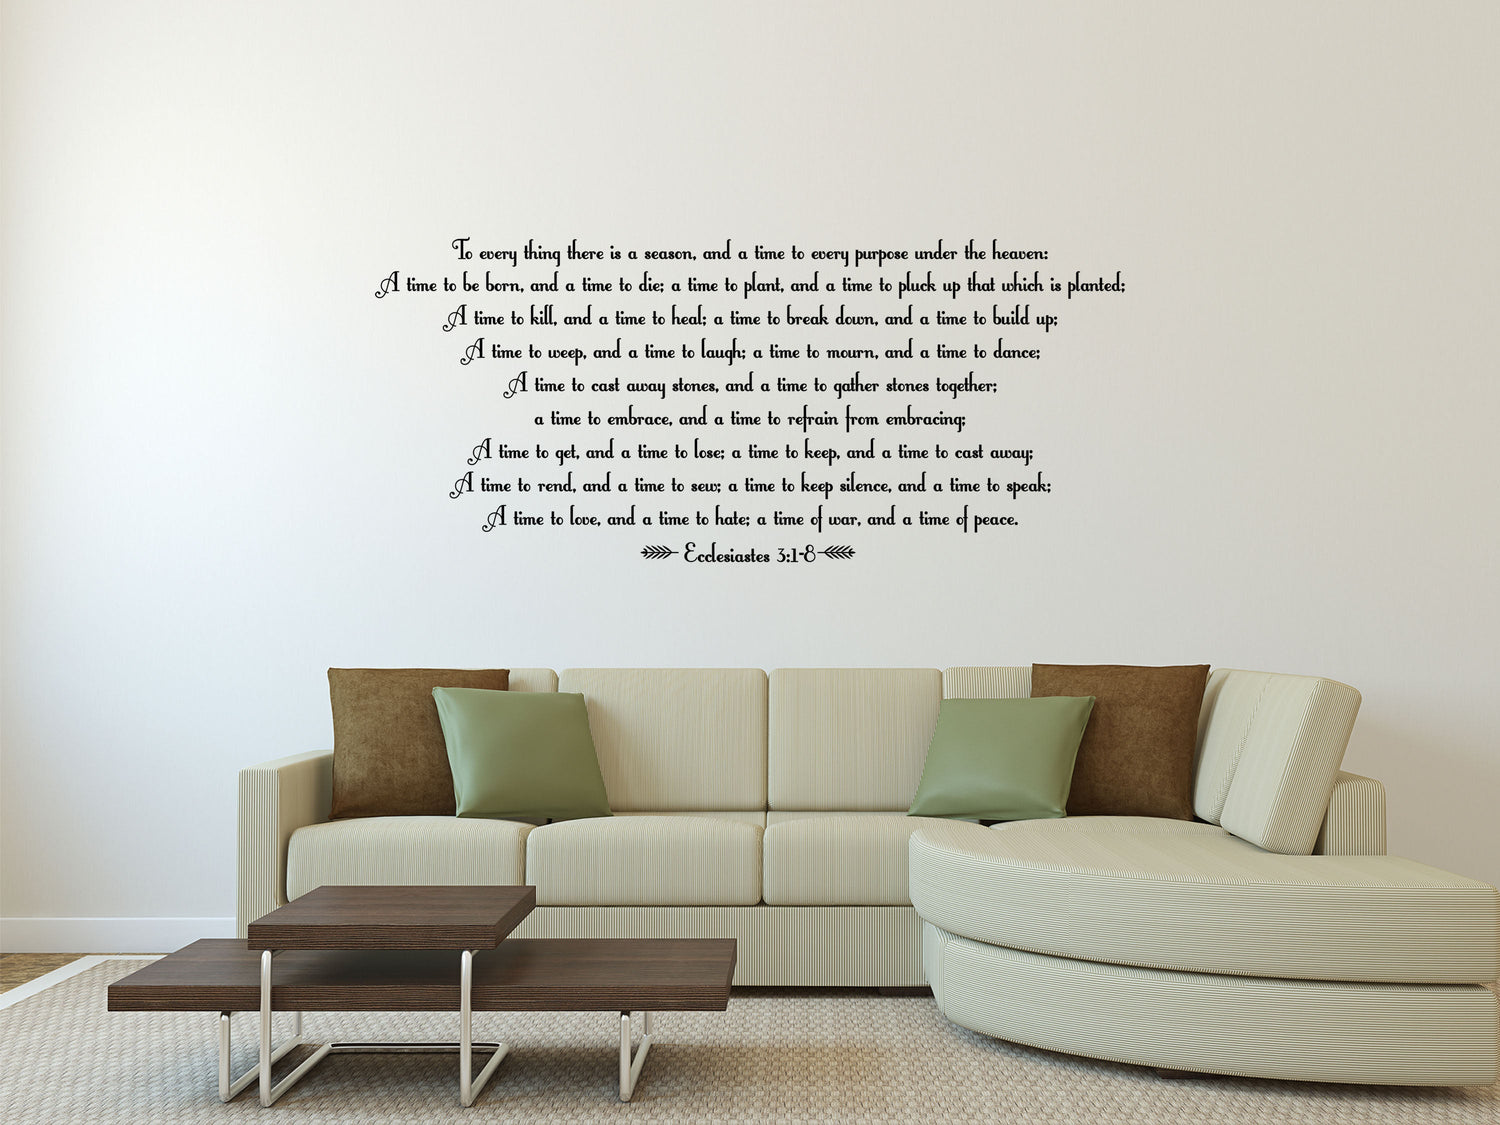 Ecclesiastes 3:1-8 - Bible Verse Wall Decal Vinyl Wall Decal Inspirational Wall Signs 